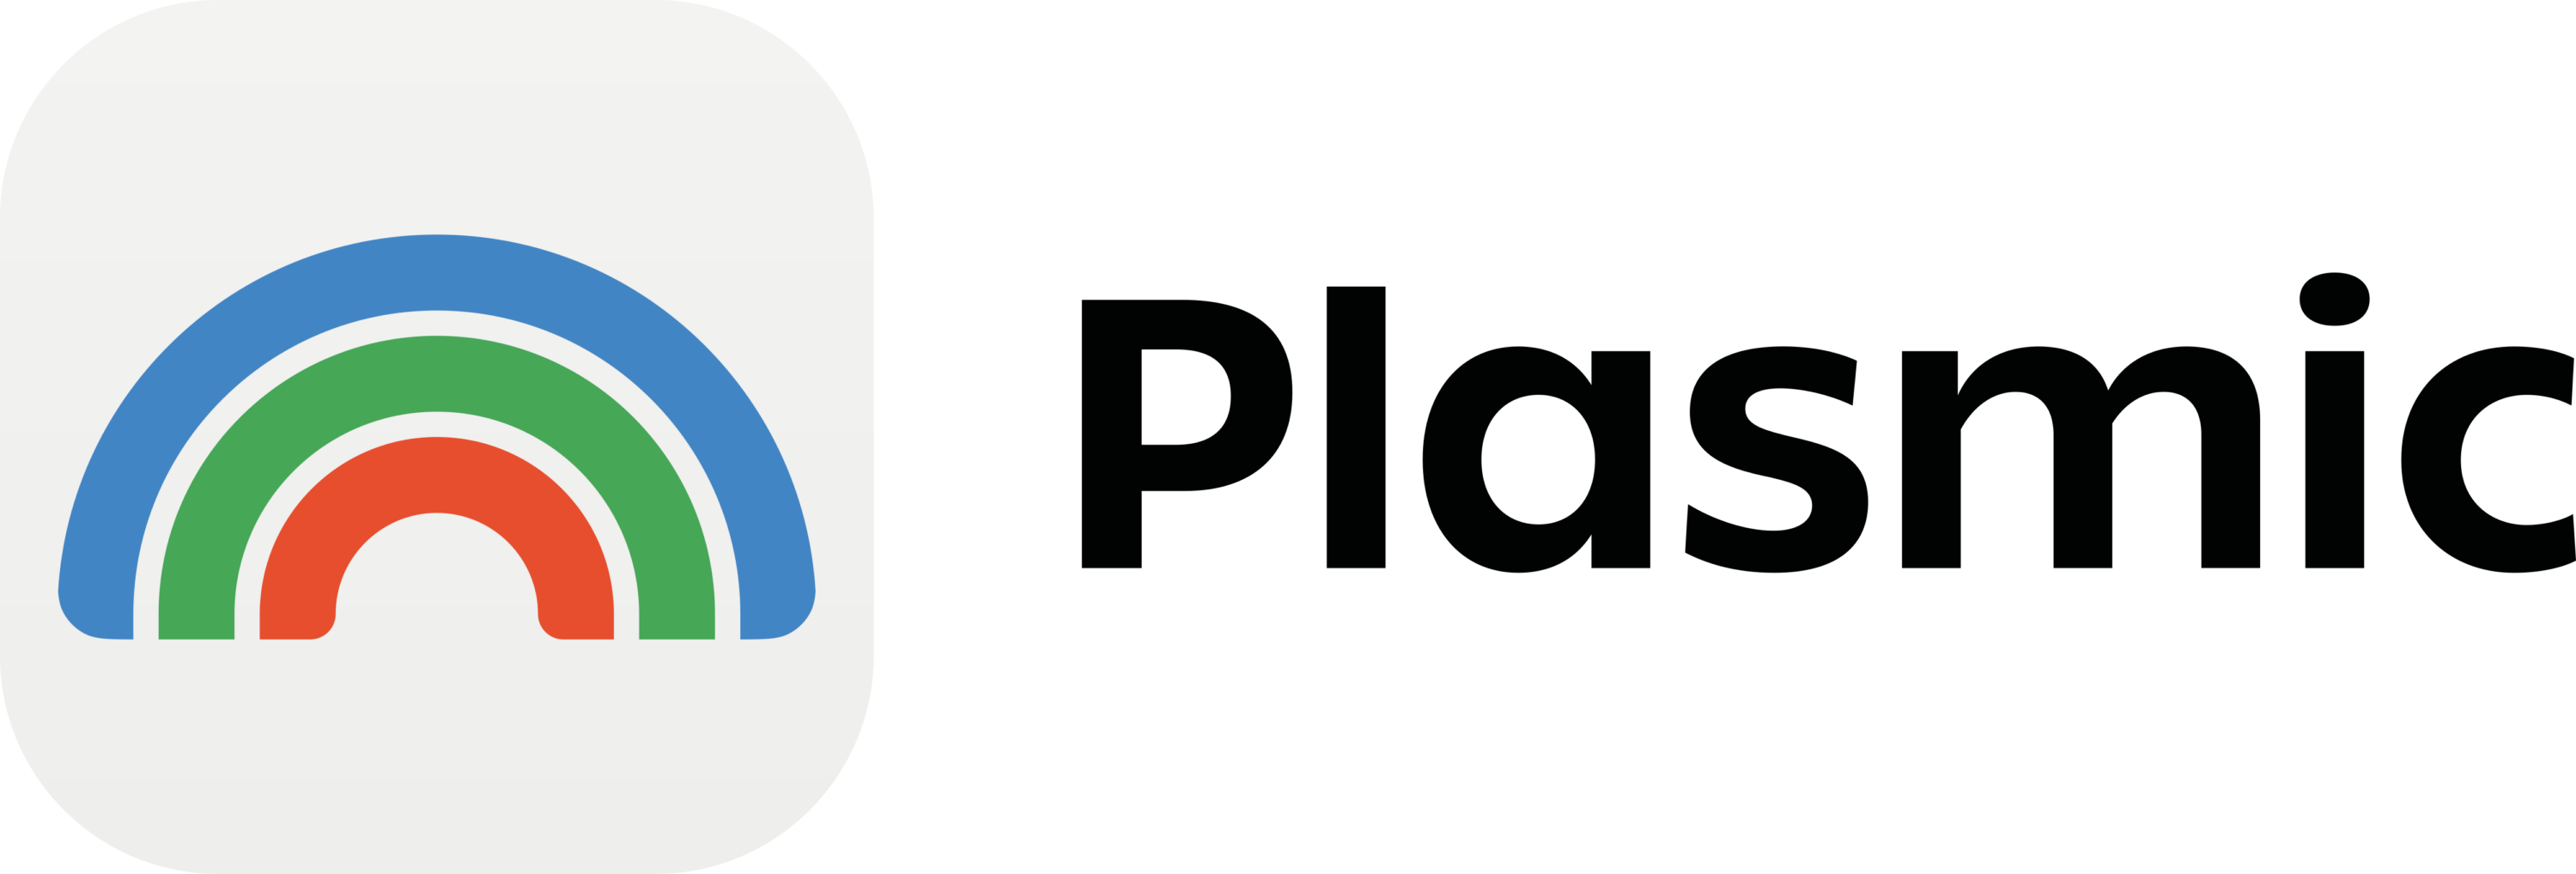 Plasmic Logo